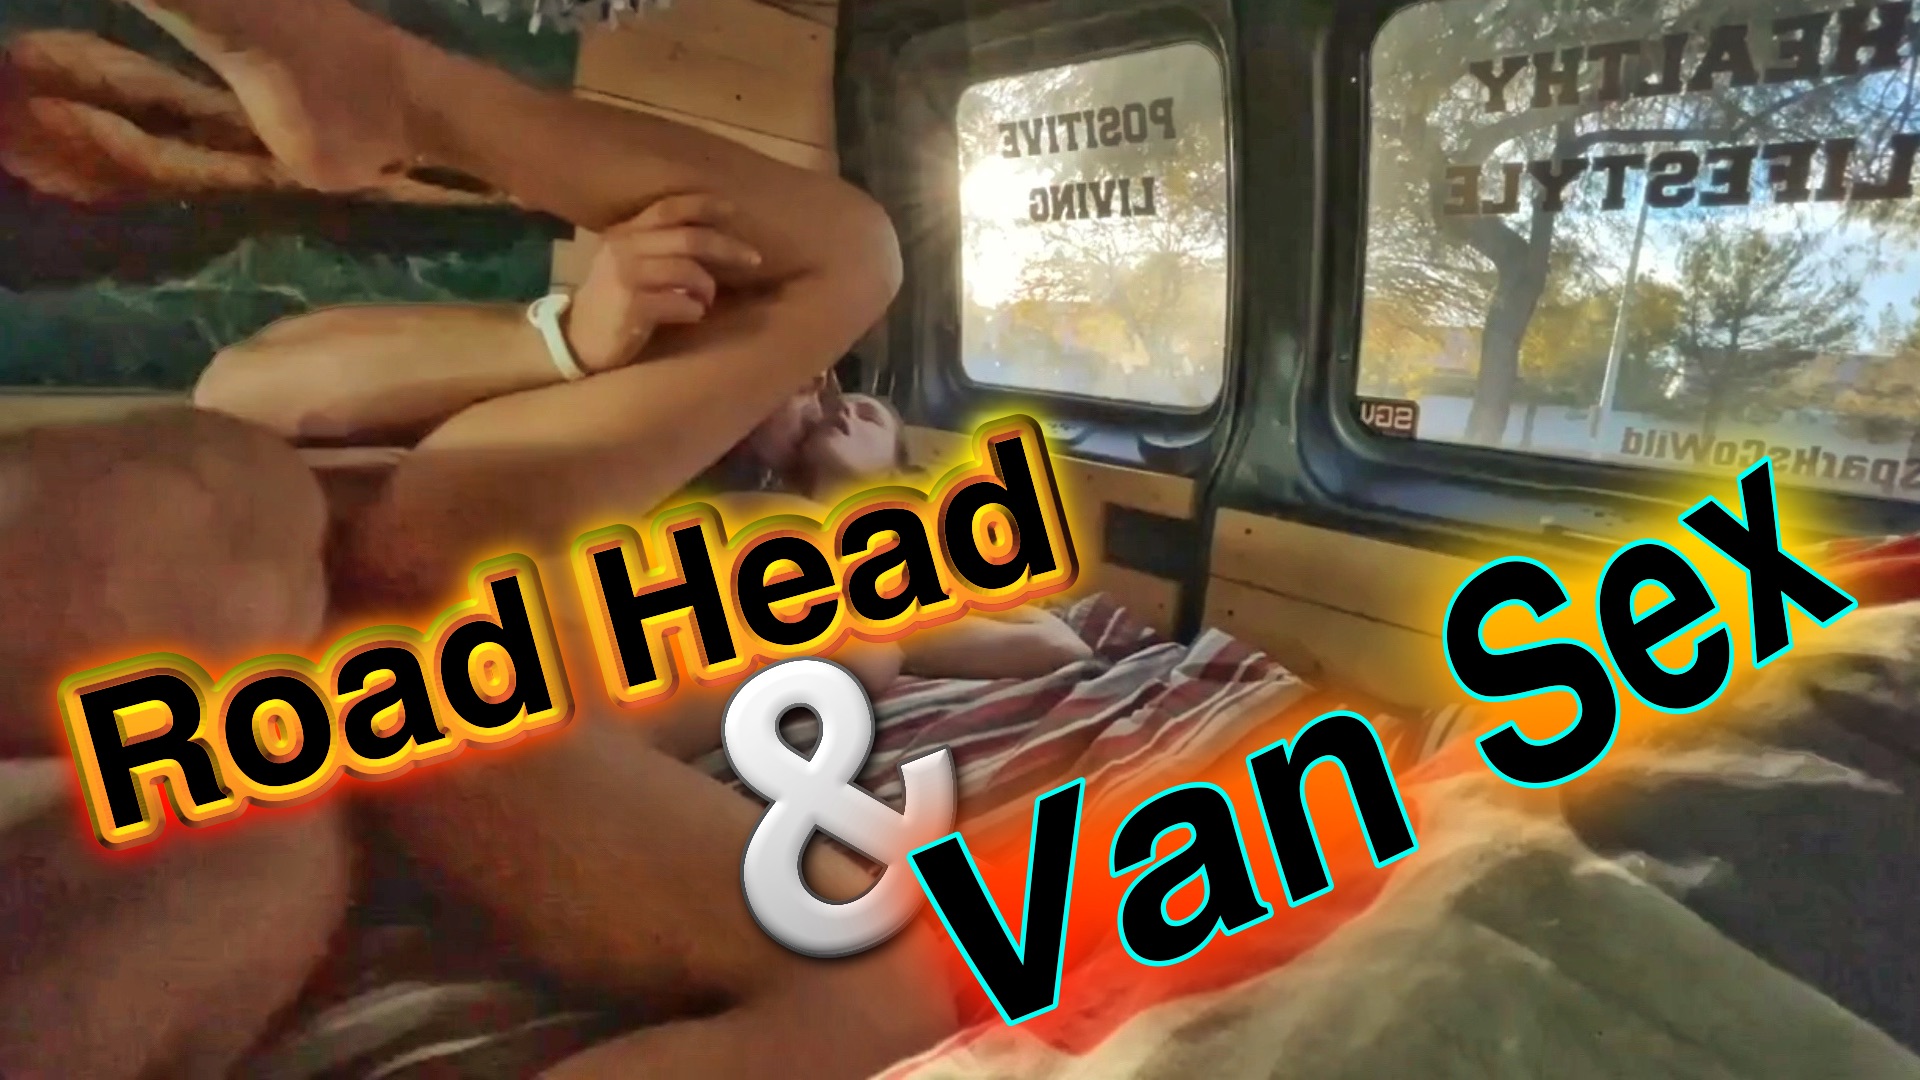 Road Head and Van Sex